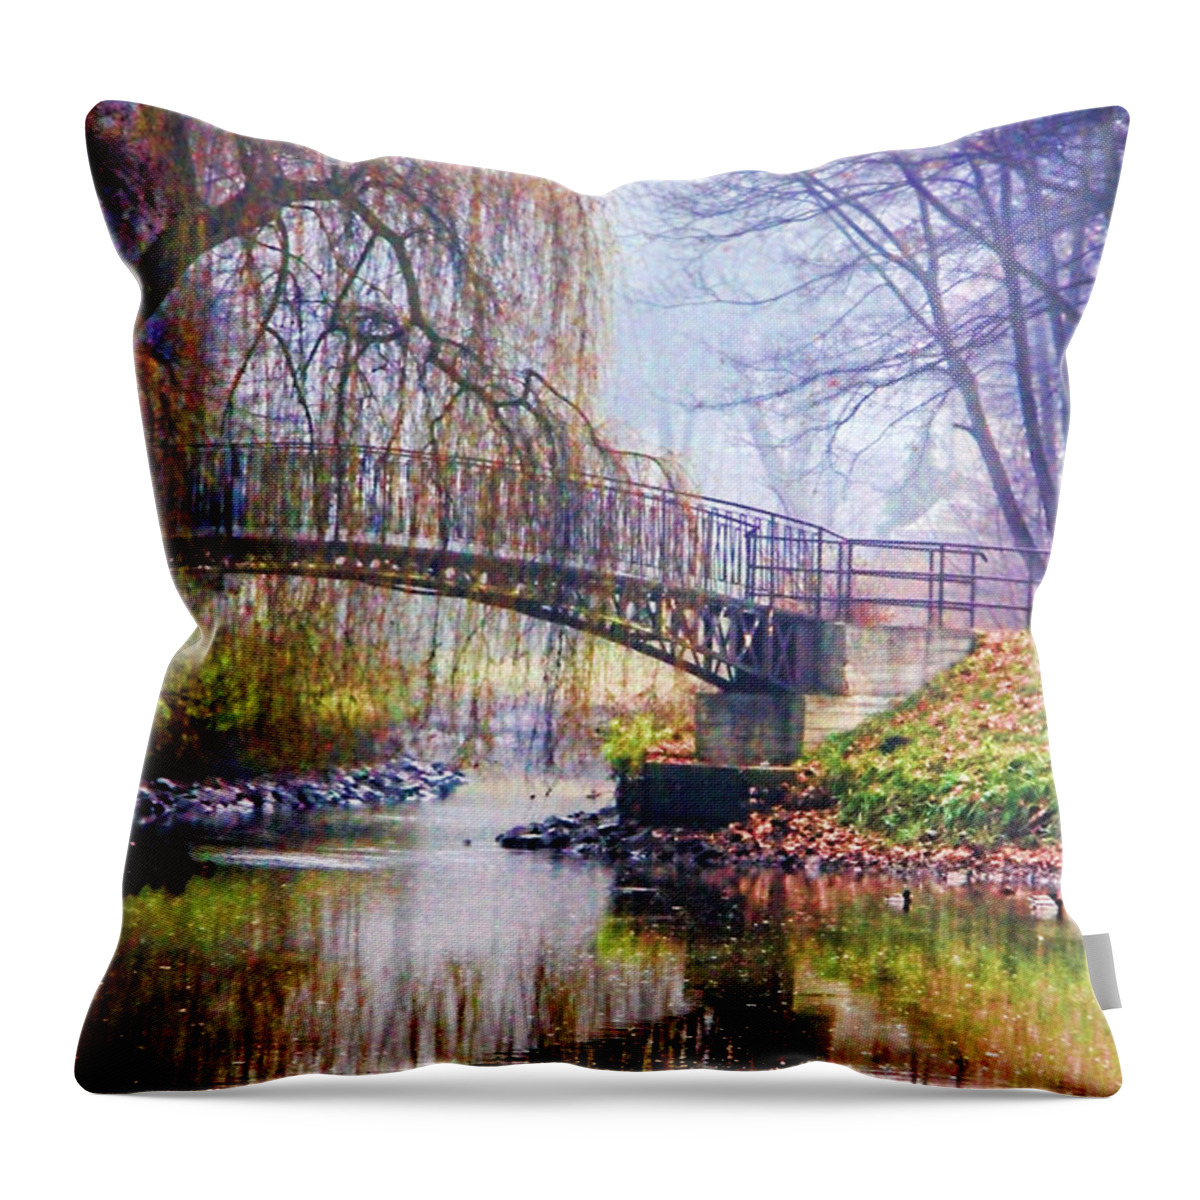 Fairytale Bridge Throw Pillow featuring the photograph Fairytale Bridge by Mariola Bitner